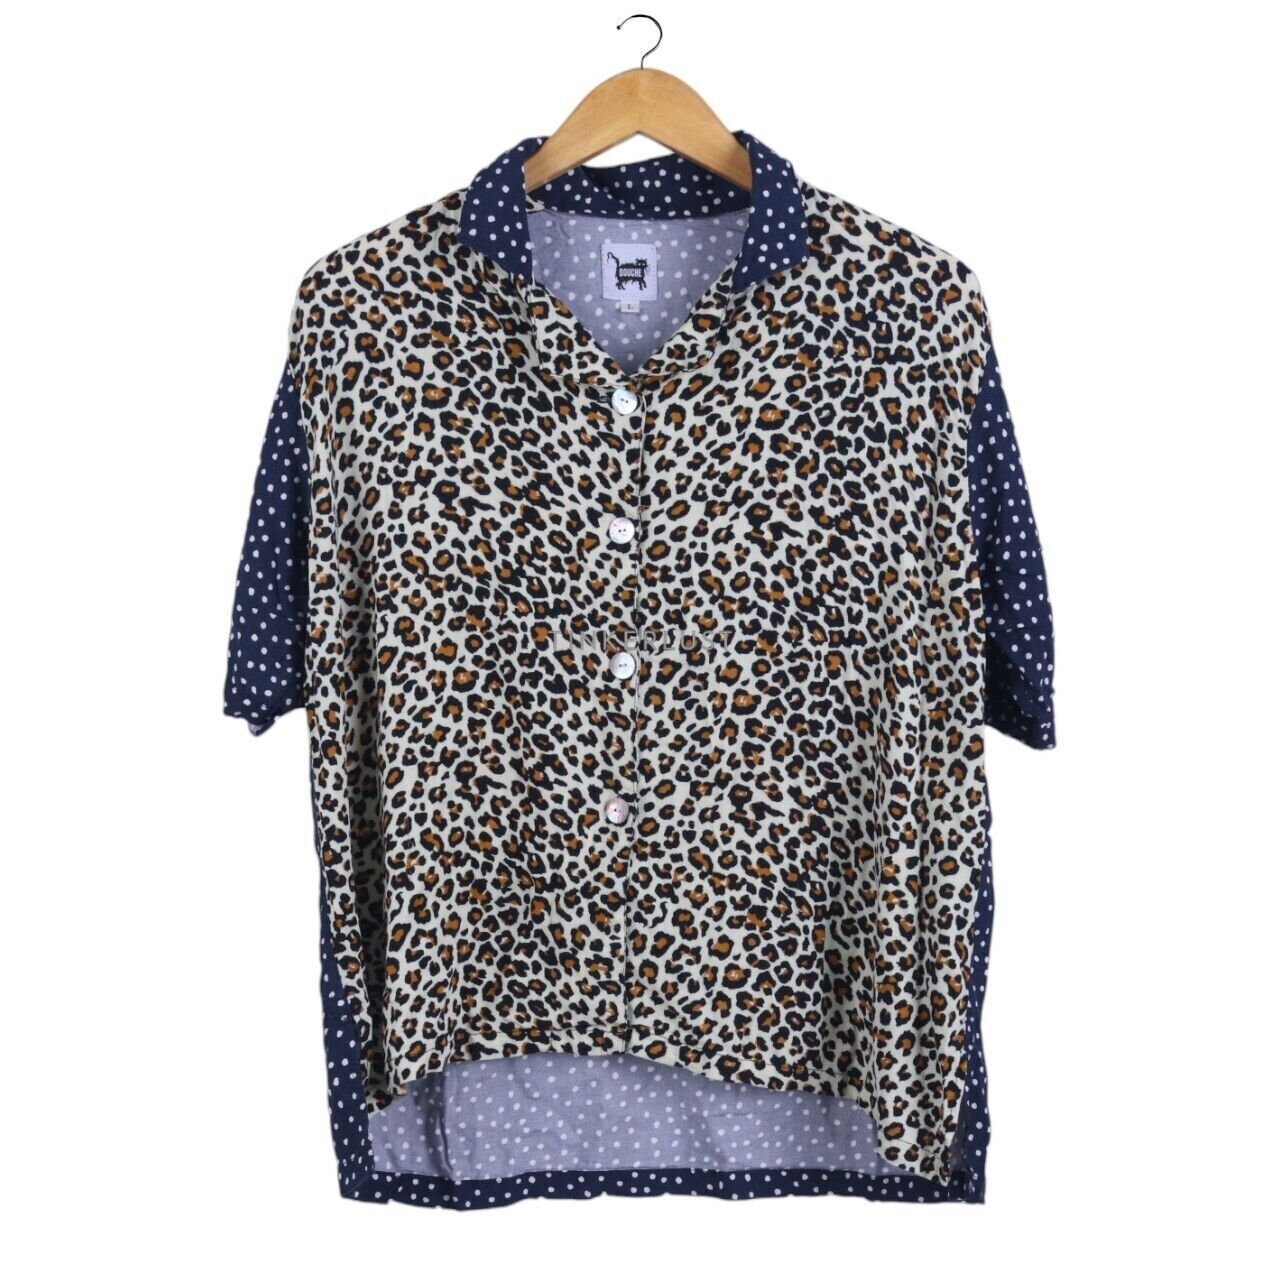 Douche Leopard Polkadot Shirt